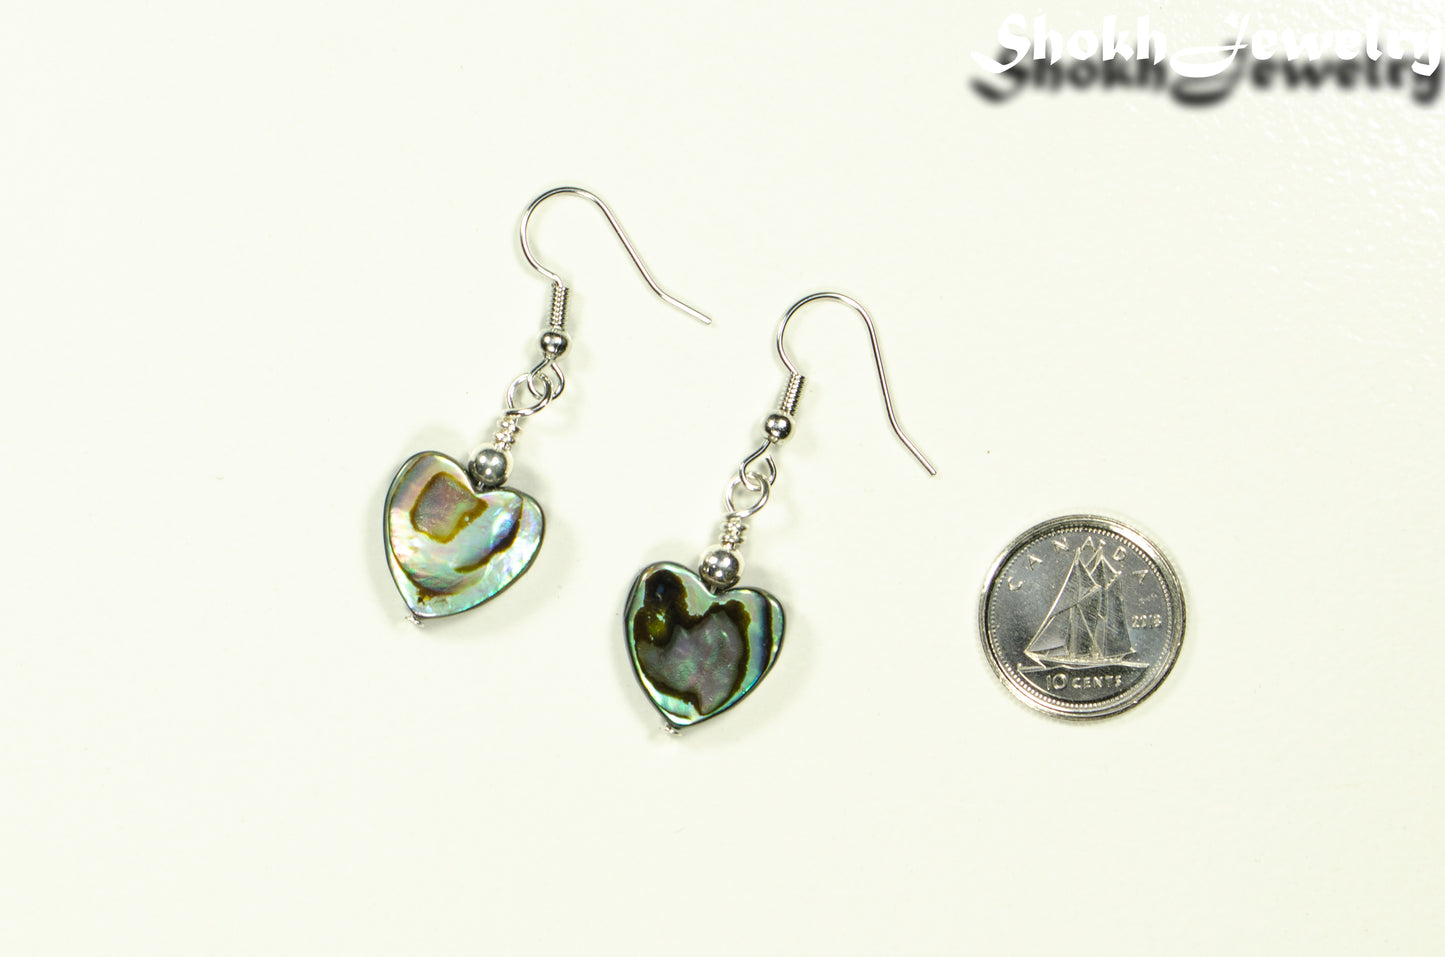 Heart Shaped Abalone Shell Earrings beside a dime.